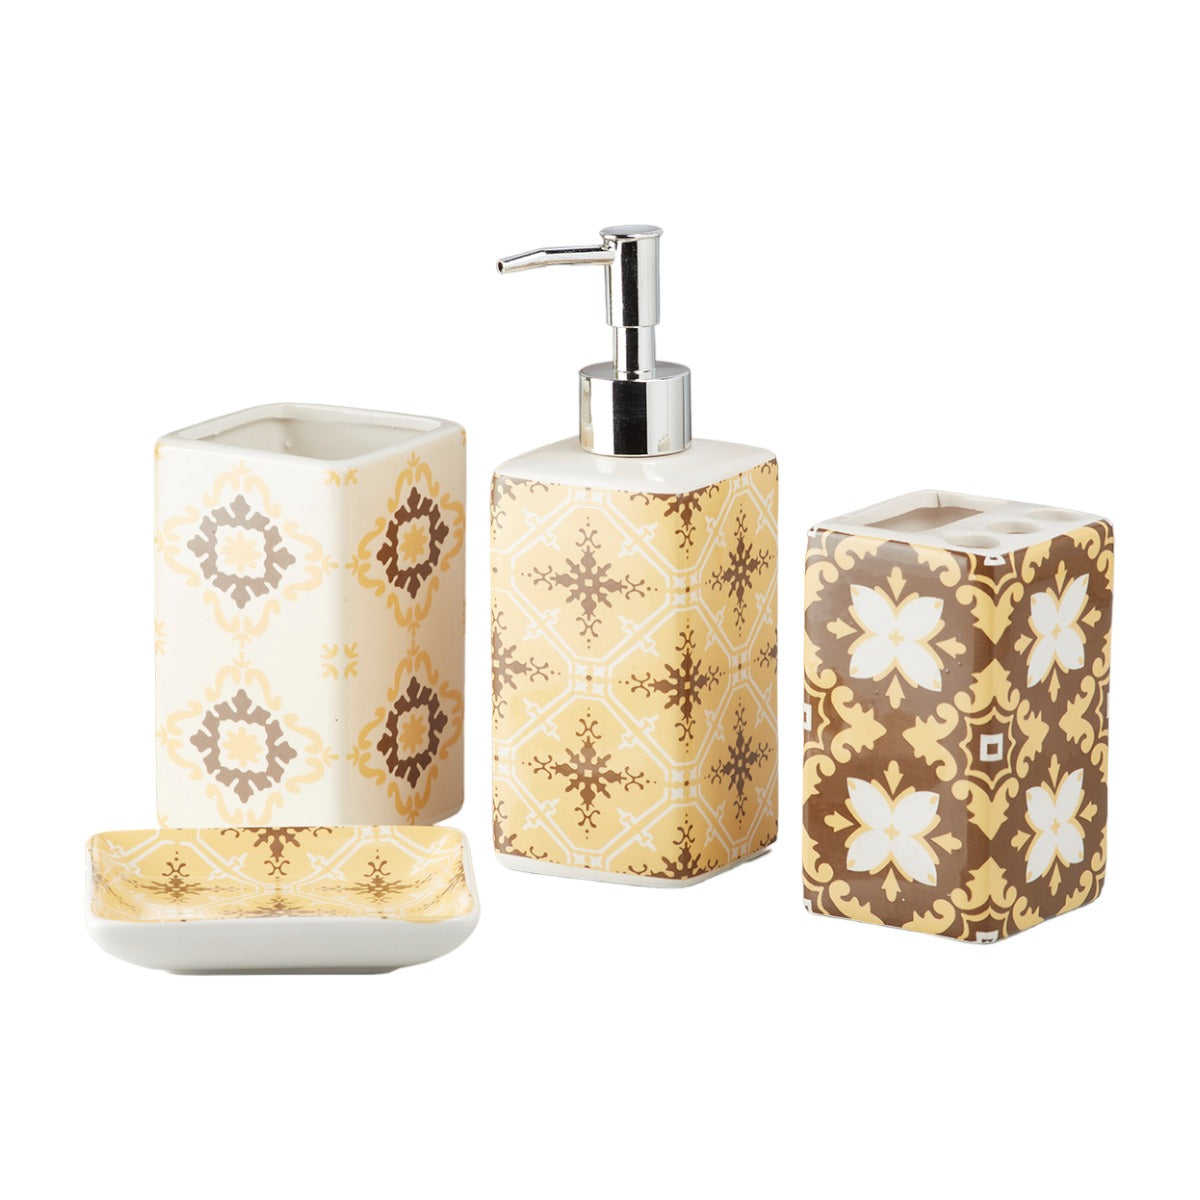 Ceramic Bathroom Set of 4 with Soap Dispenser (10176)